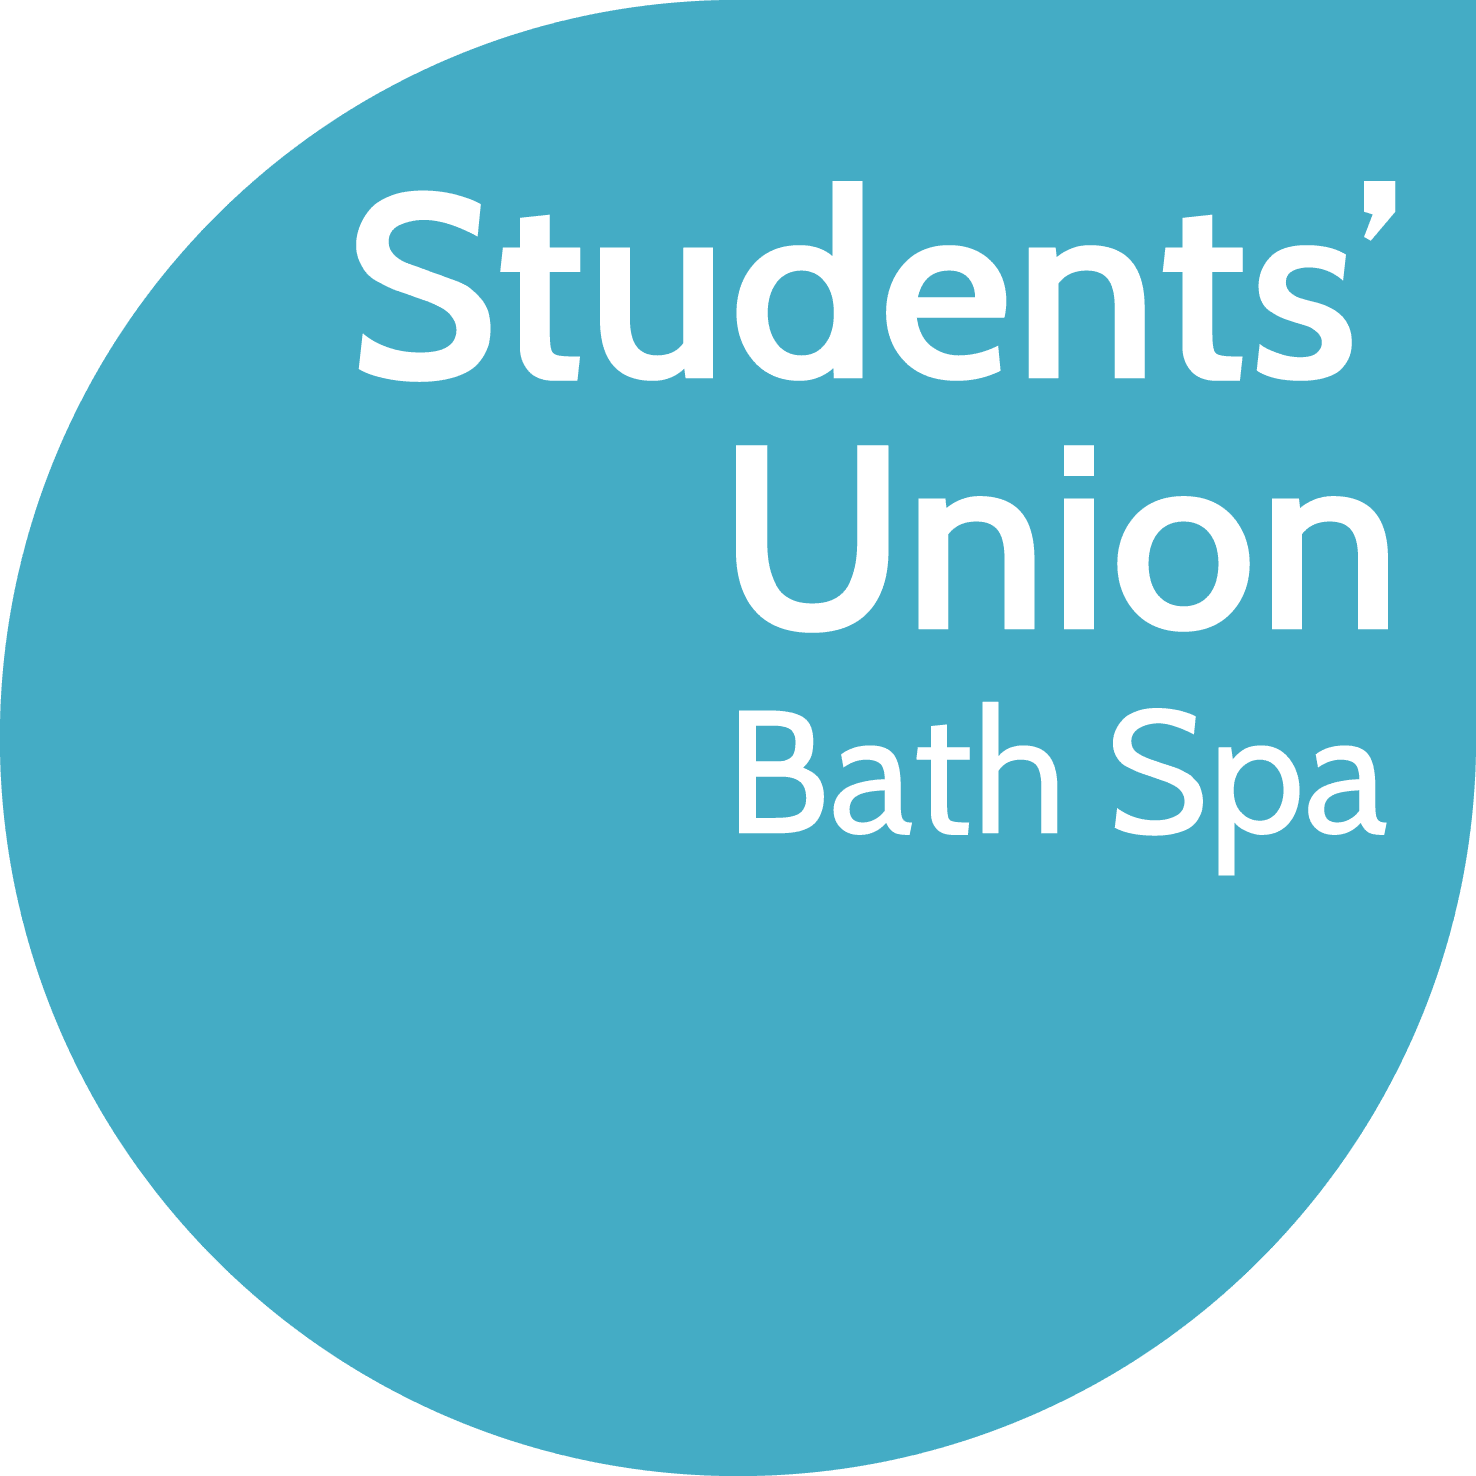 Bath Spa Students Union logo